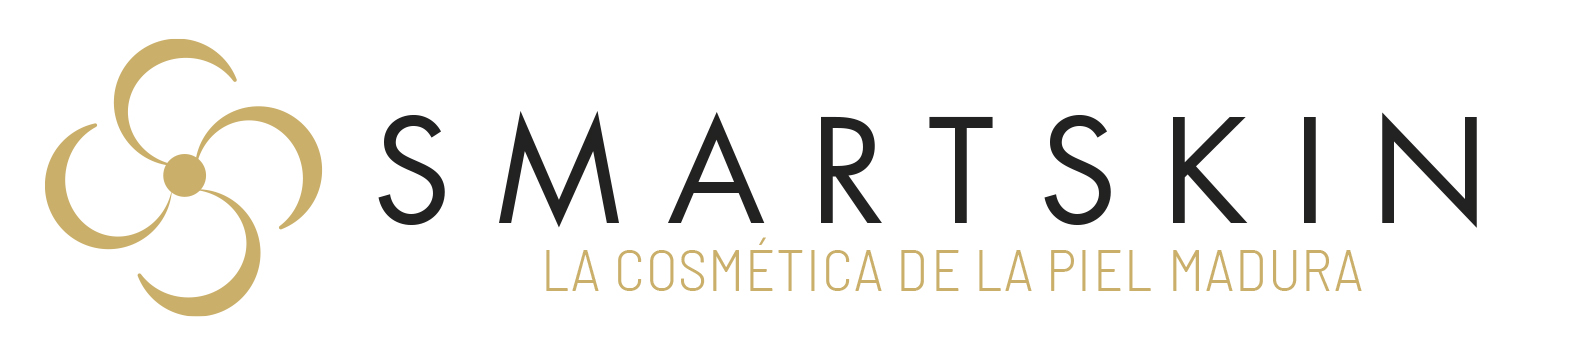 SMARTSKIN logo1 Nuevo Piel madura